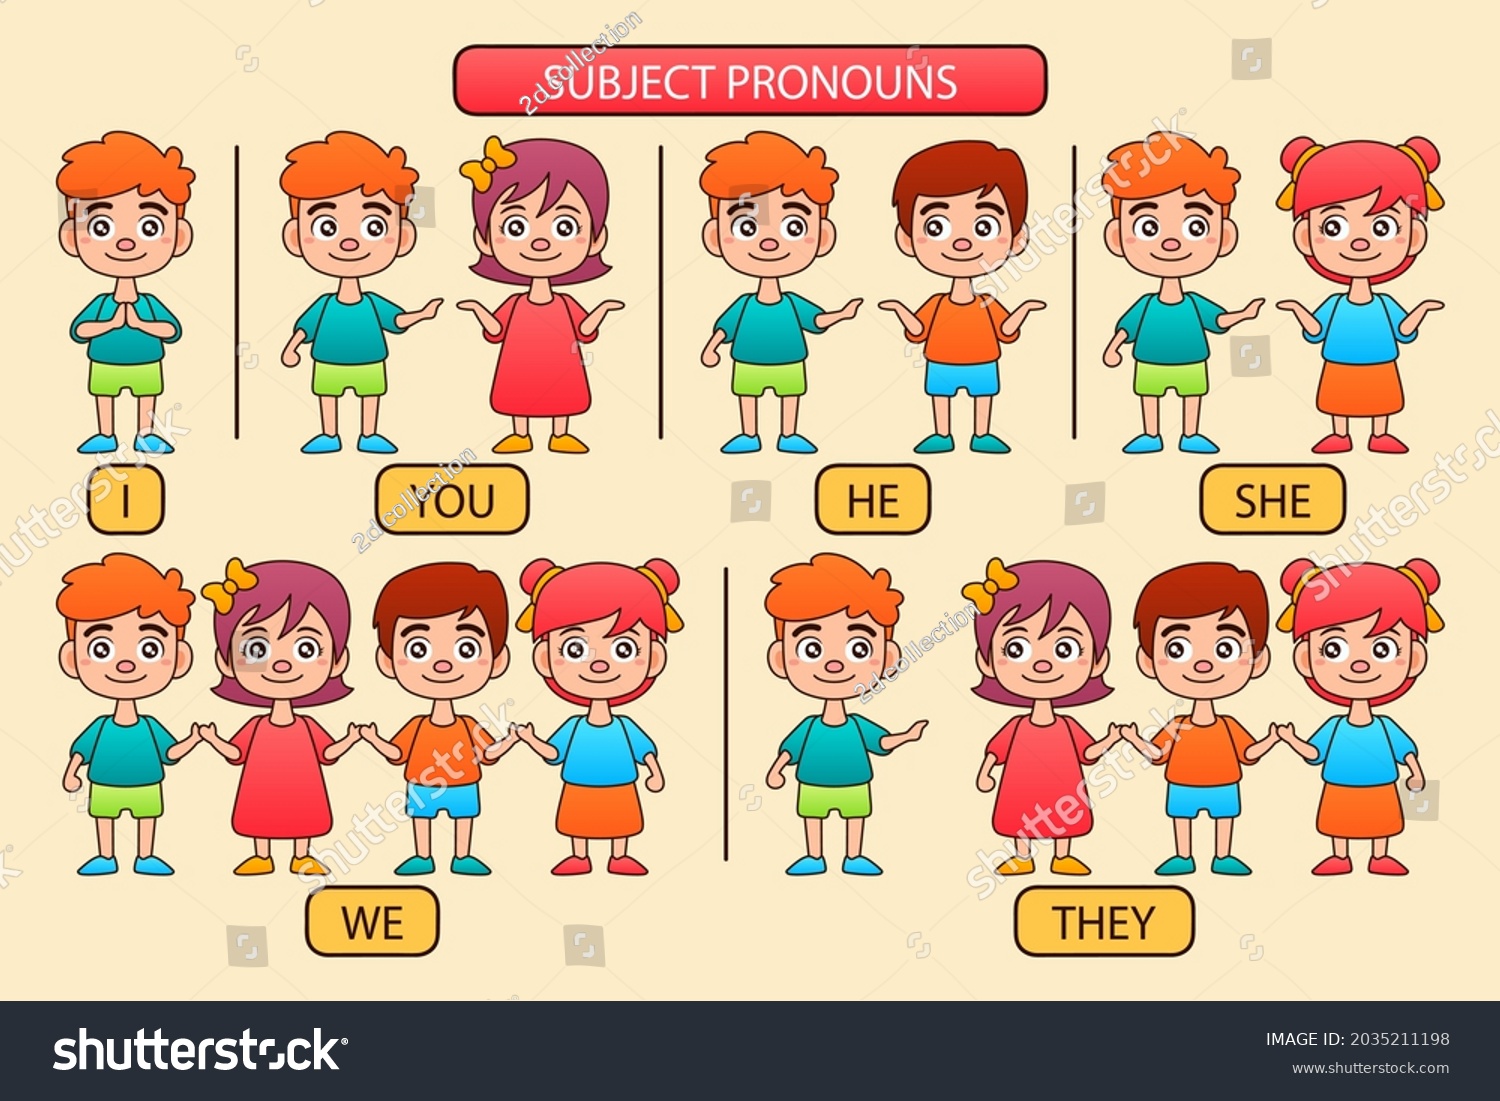 Pronouns Understanding Pronouns